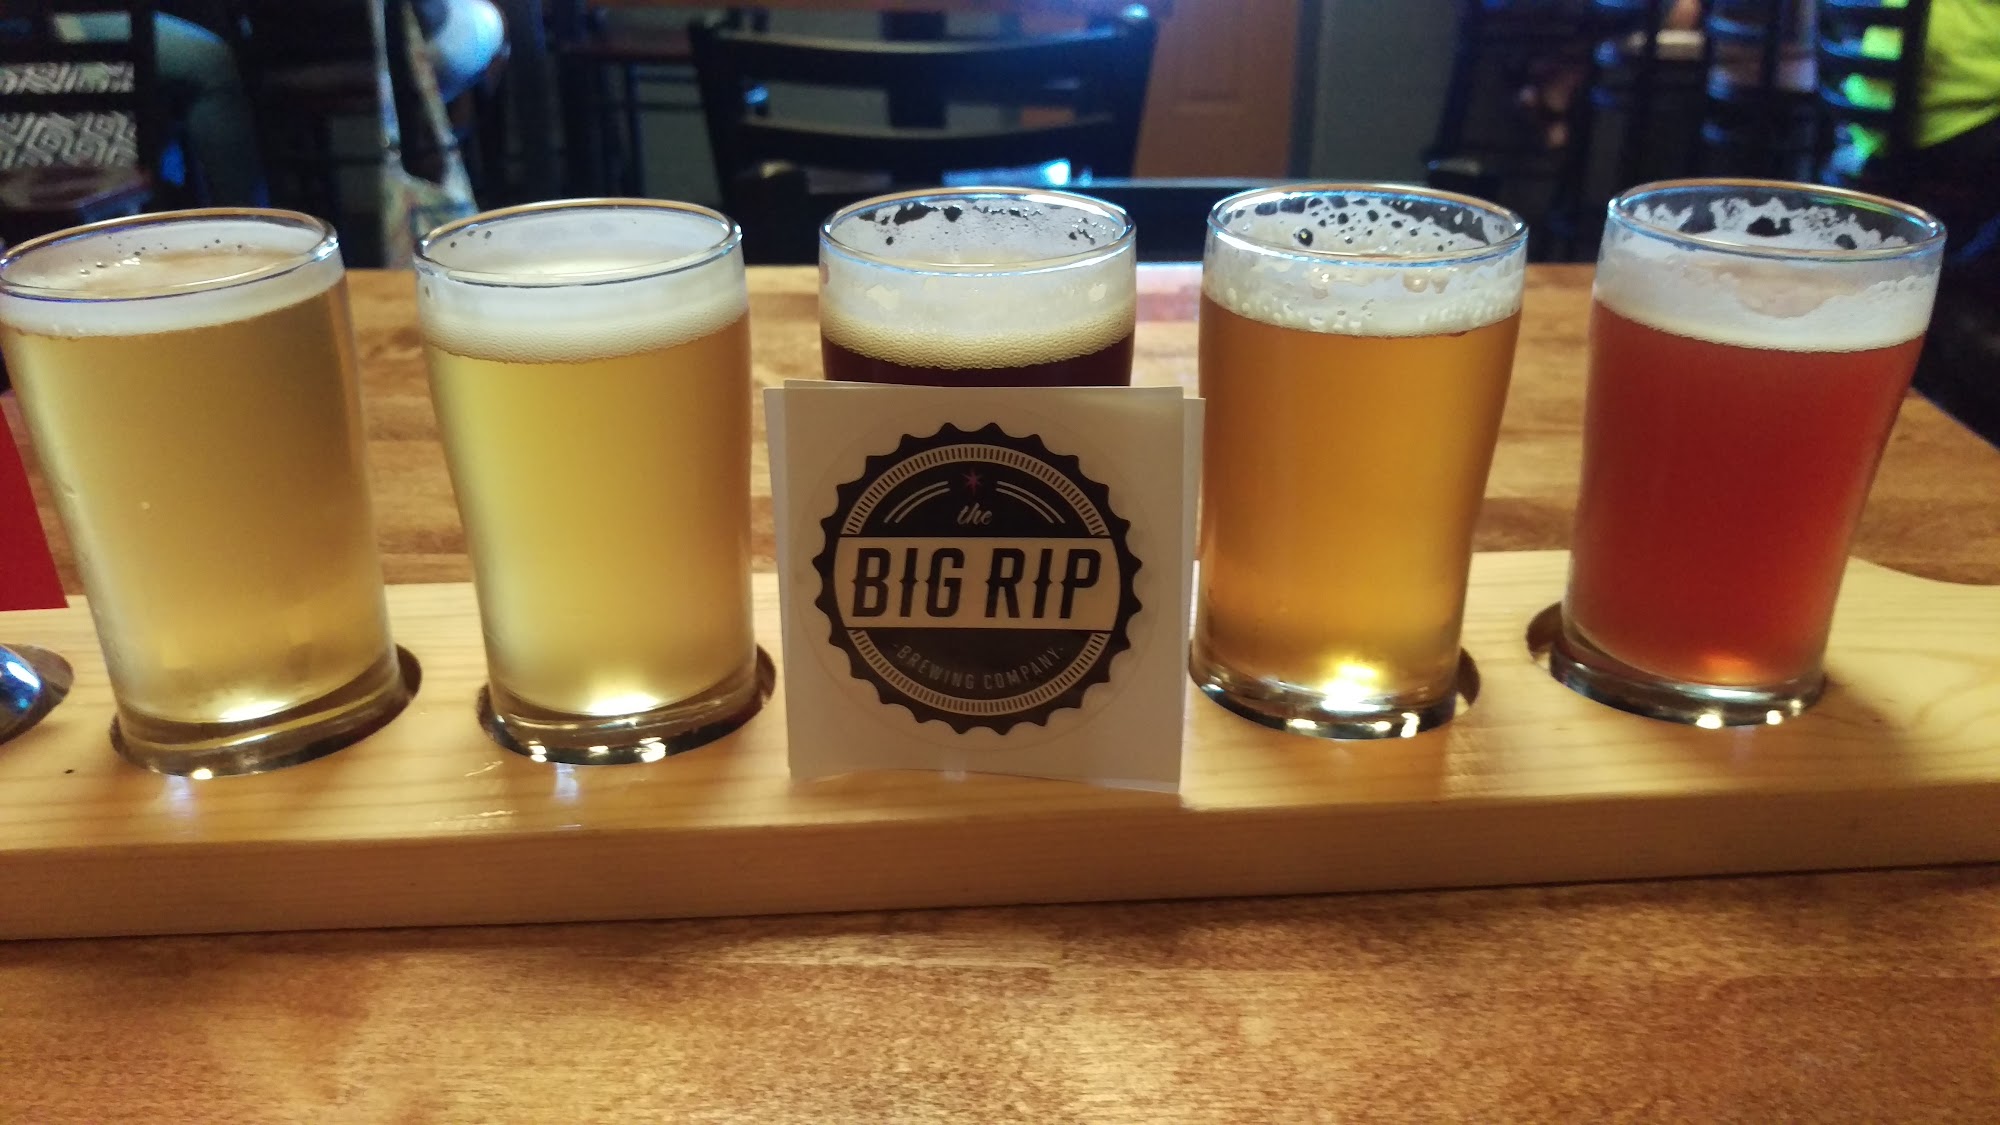 The Big Rip Brewing Company